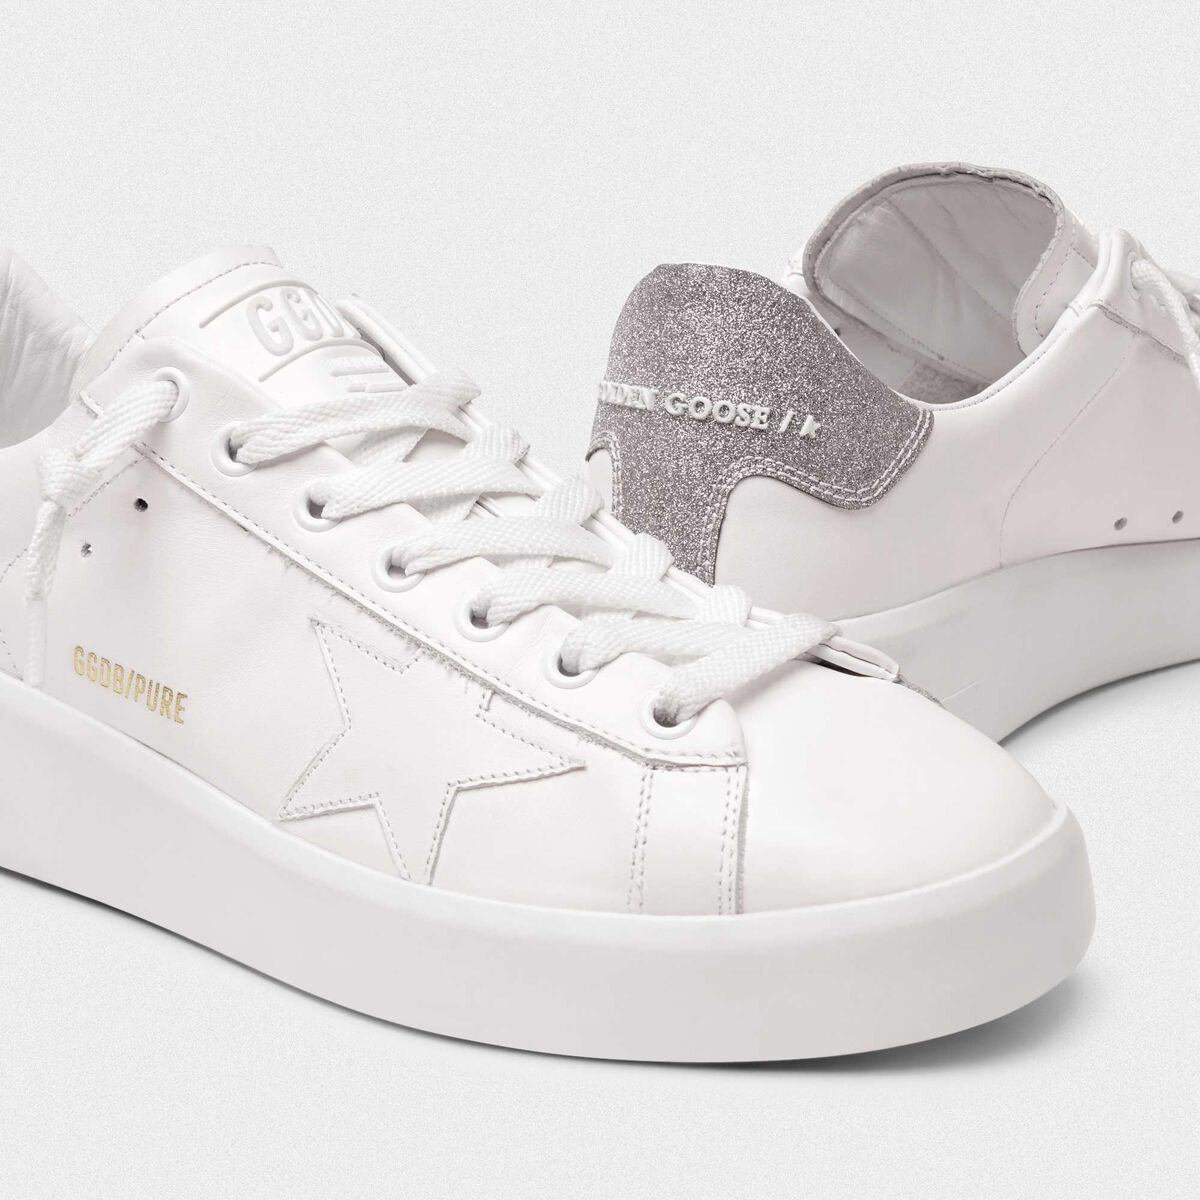 PURESTAR sneakers with glittery silver heel tab